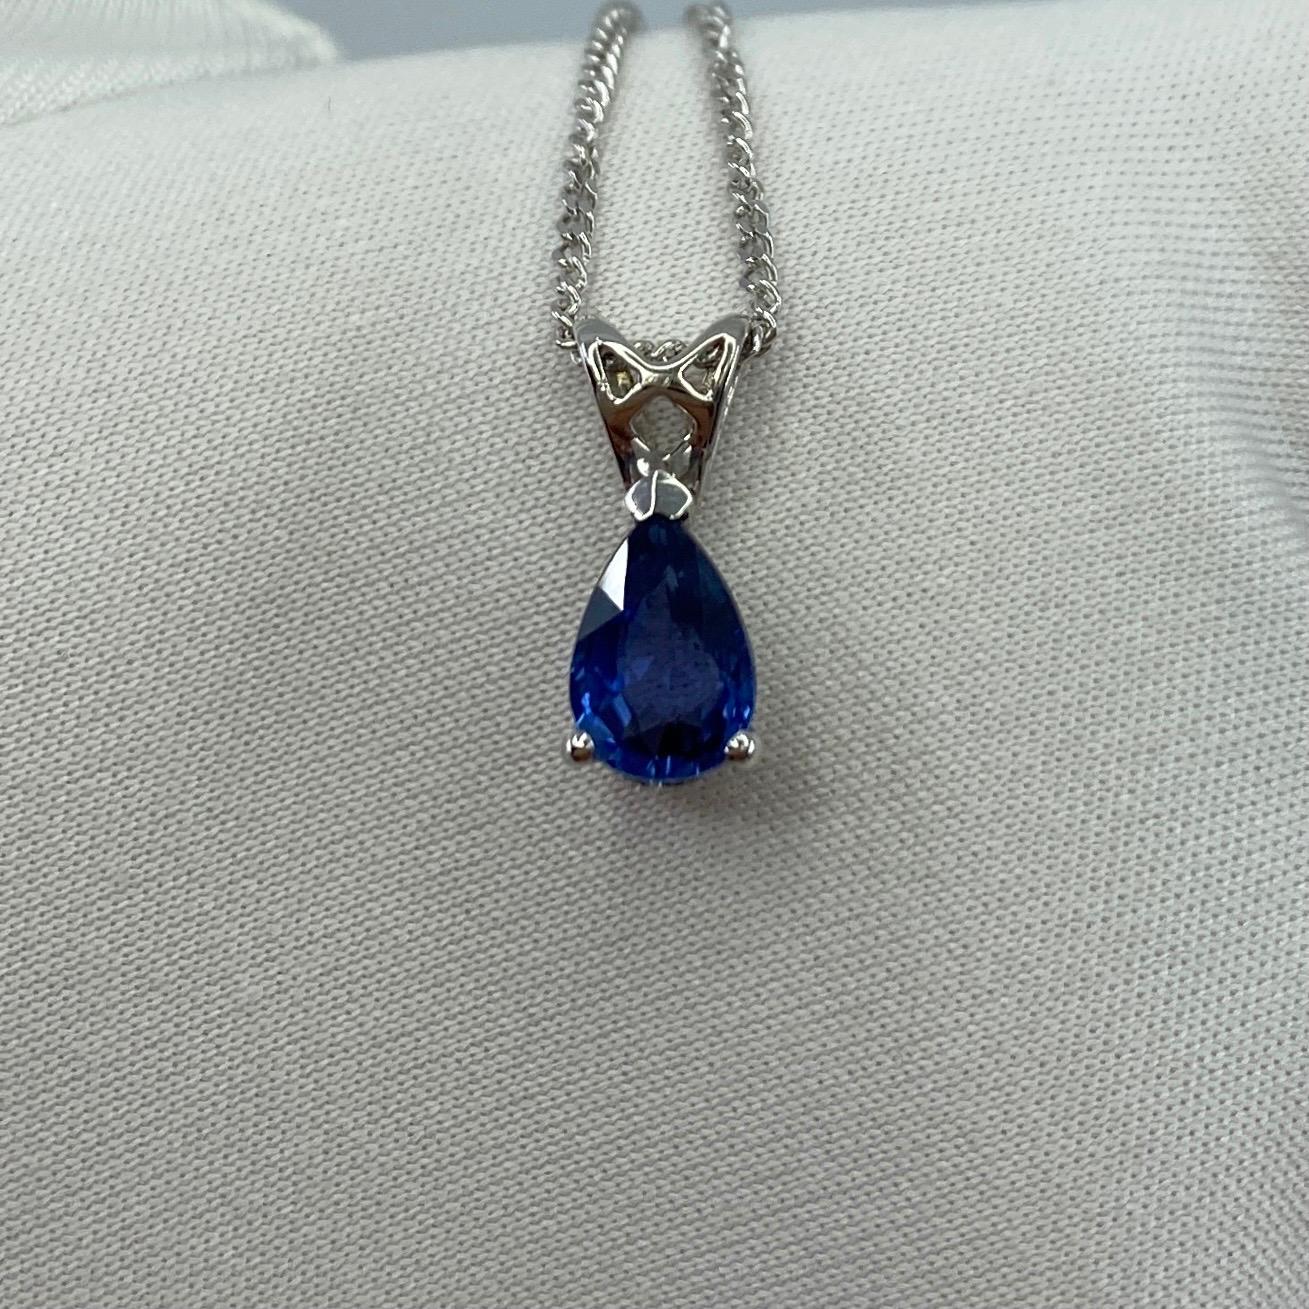 ceylon sapphire pendant necklace